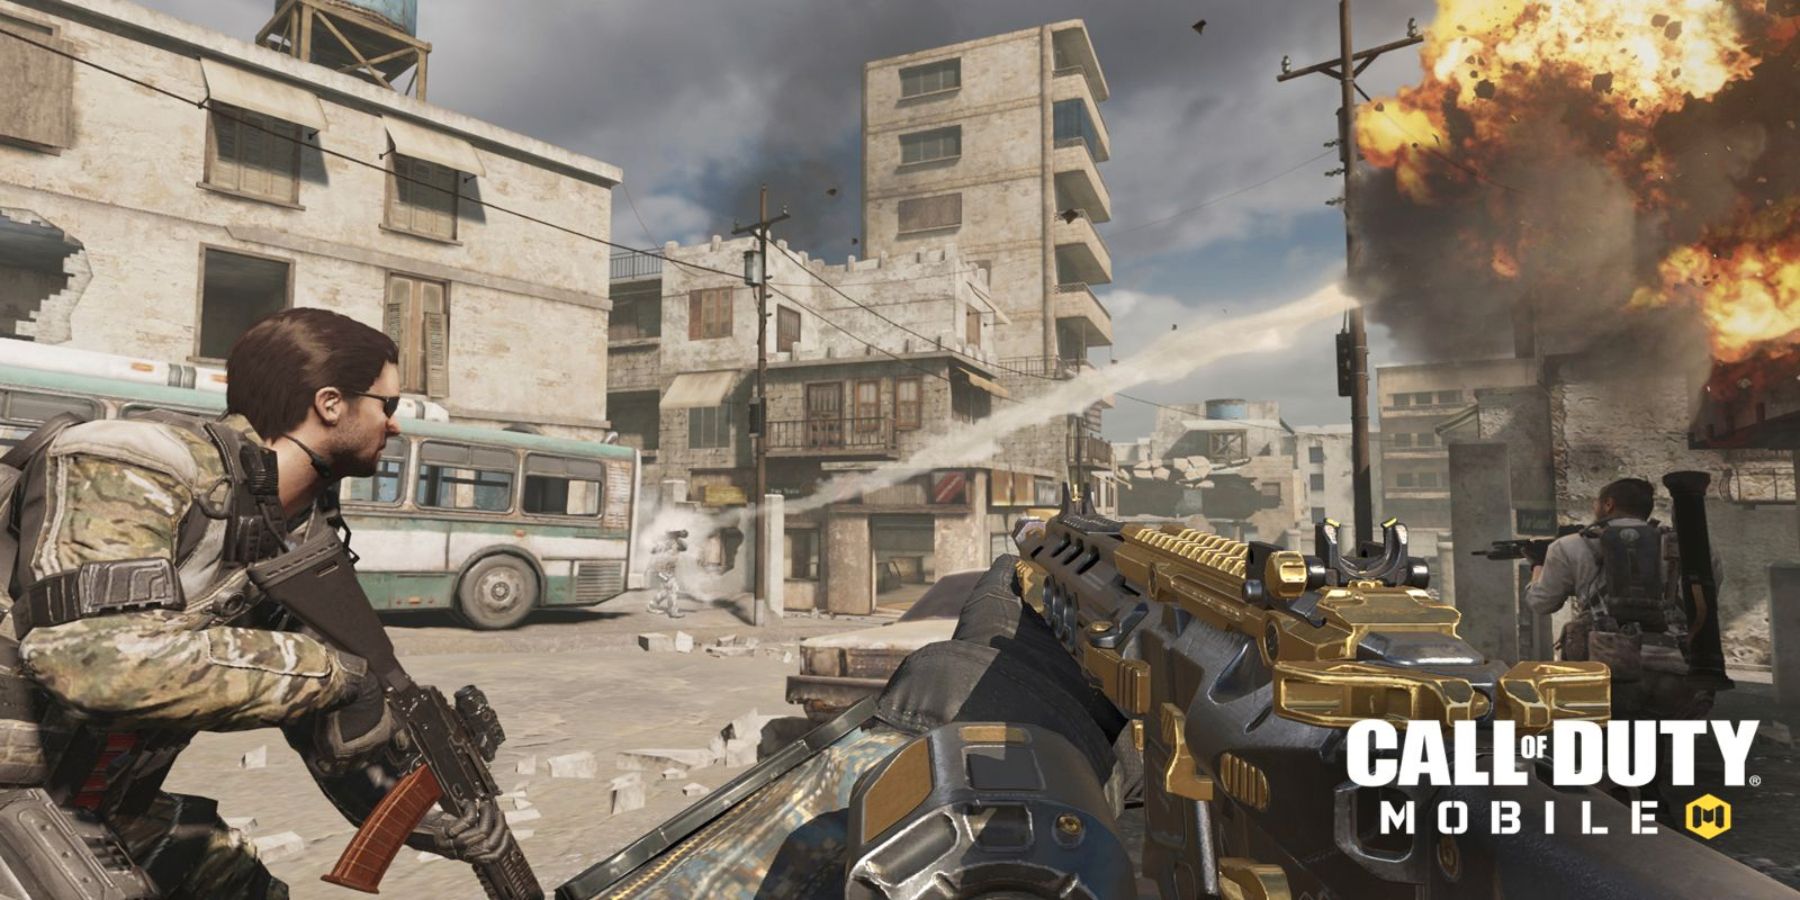 Call Of Duty: მობილური: 10 საუკეთესო თავდასხმის იარაღი მე-8 სეზონისთვის, რეიტინგში